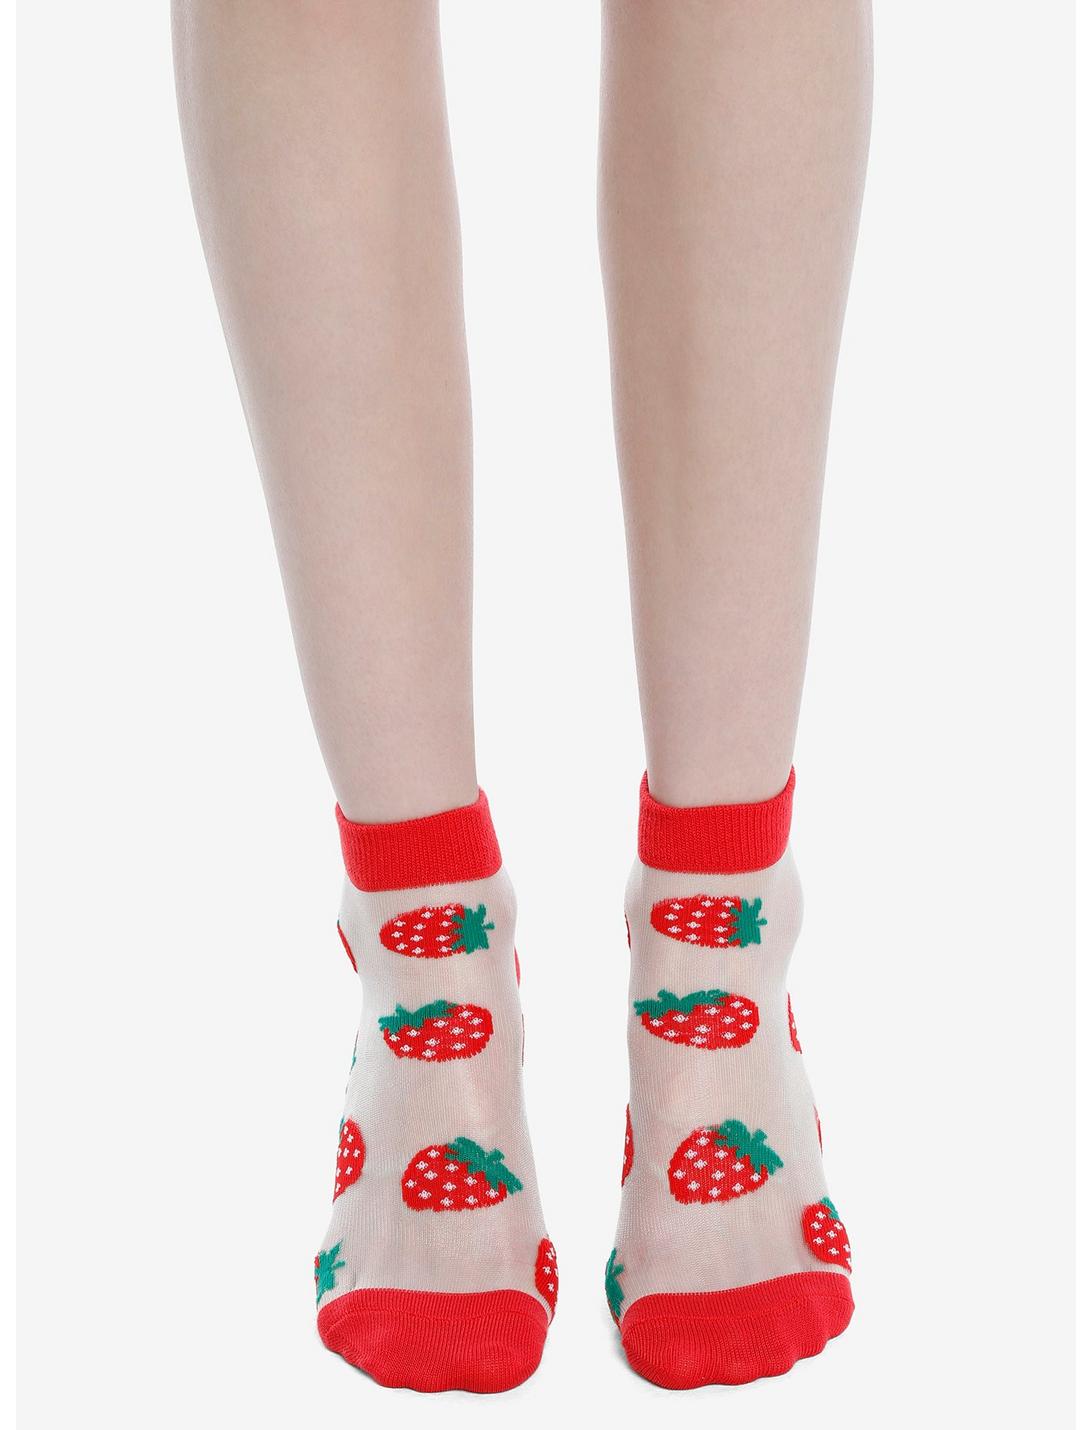 Strawberry Sheer Ankle Socks, , hi-res